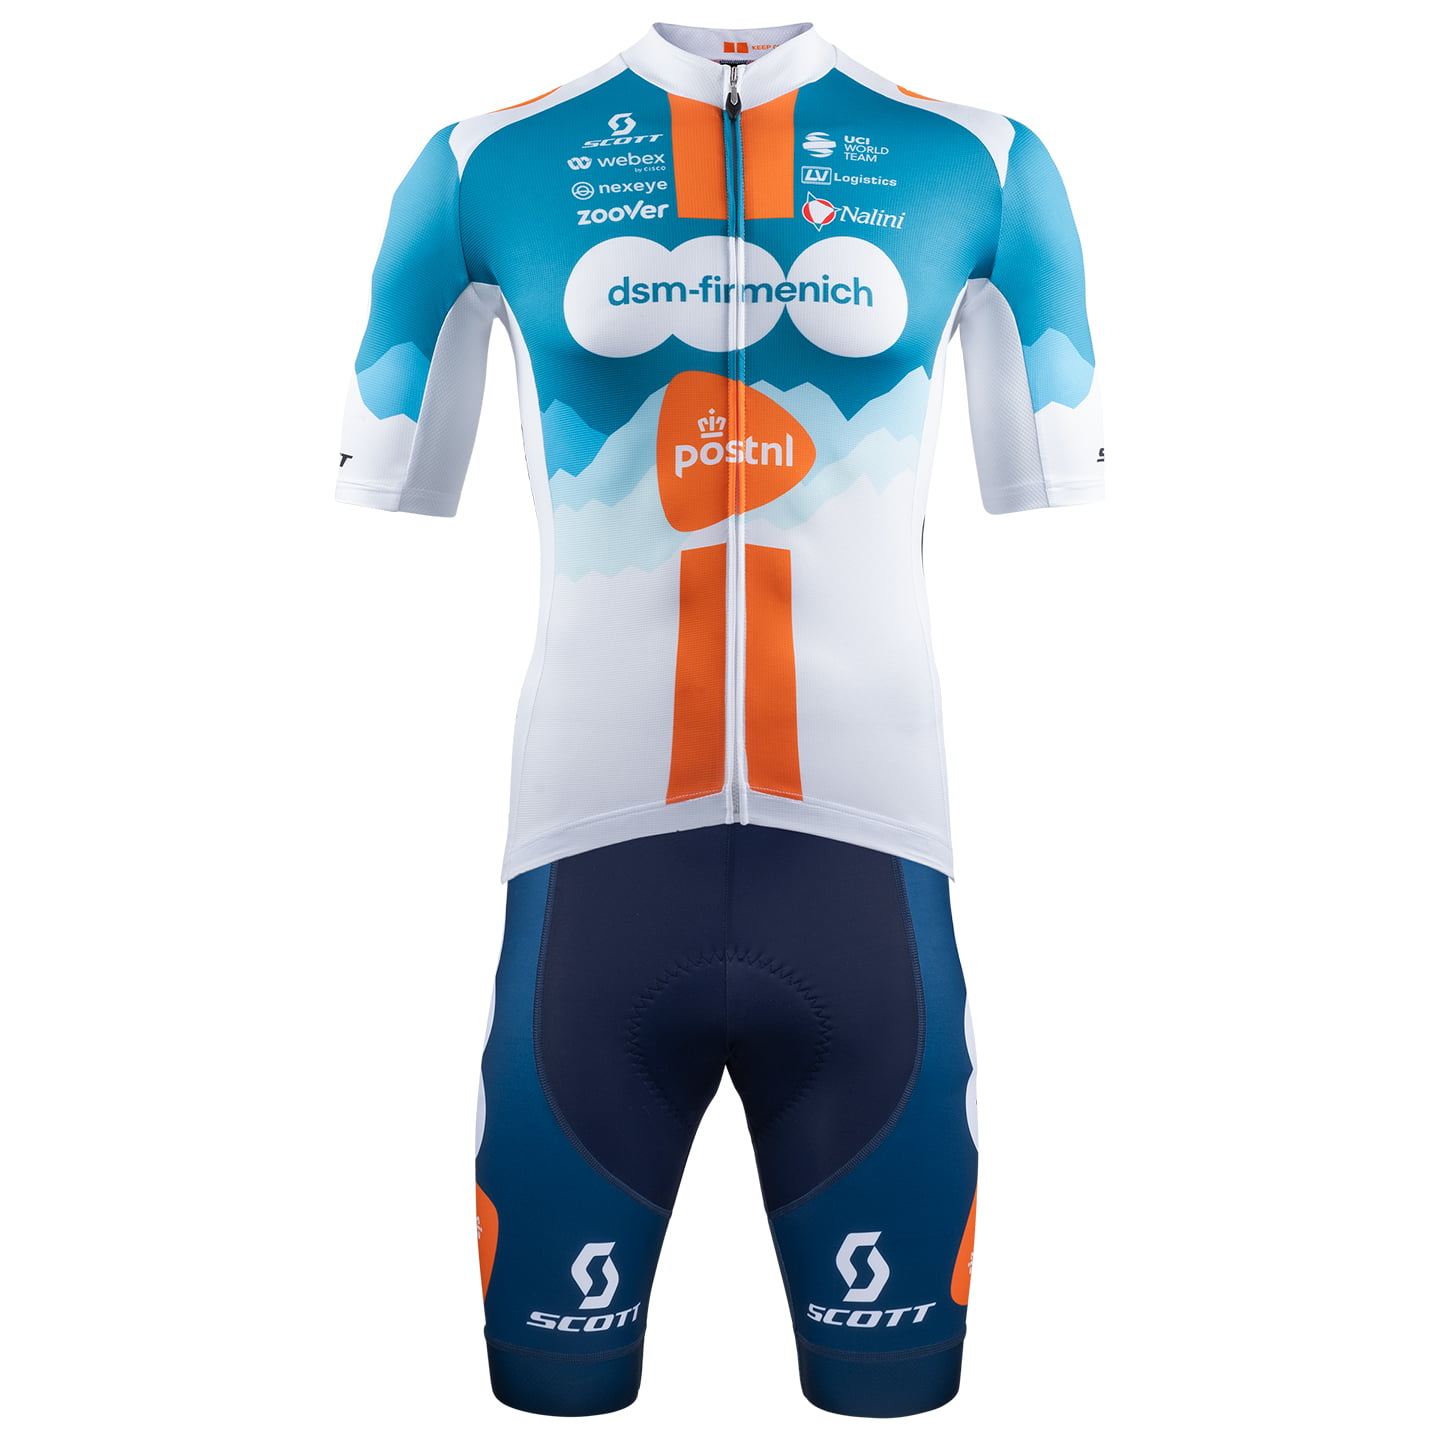 DSM-Firmenich PostNL 2024 Set (cycling jersey + cycling shorts) Set (2 pieces), for men, Cycling clothing